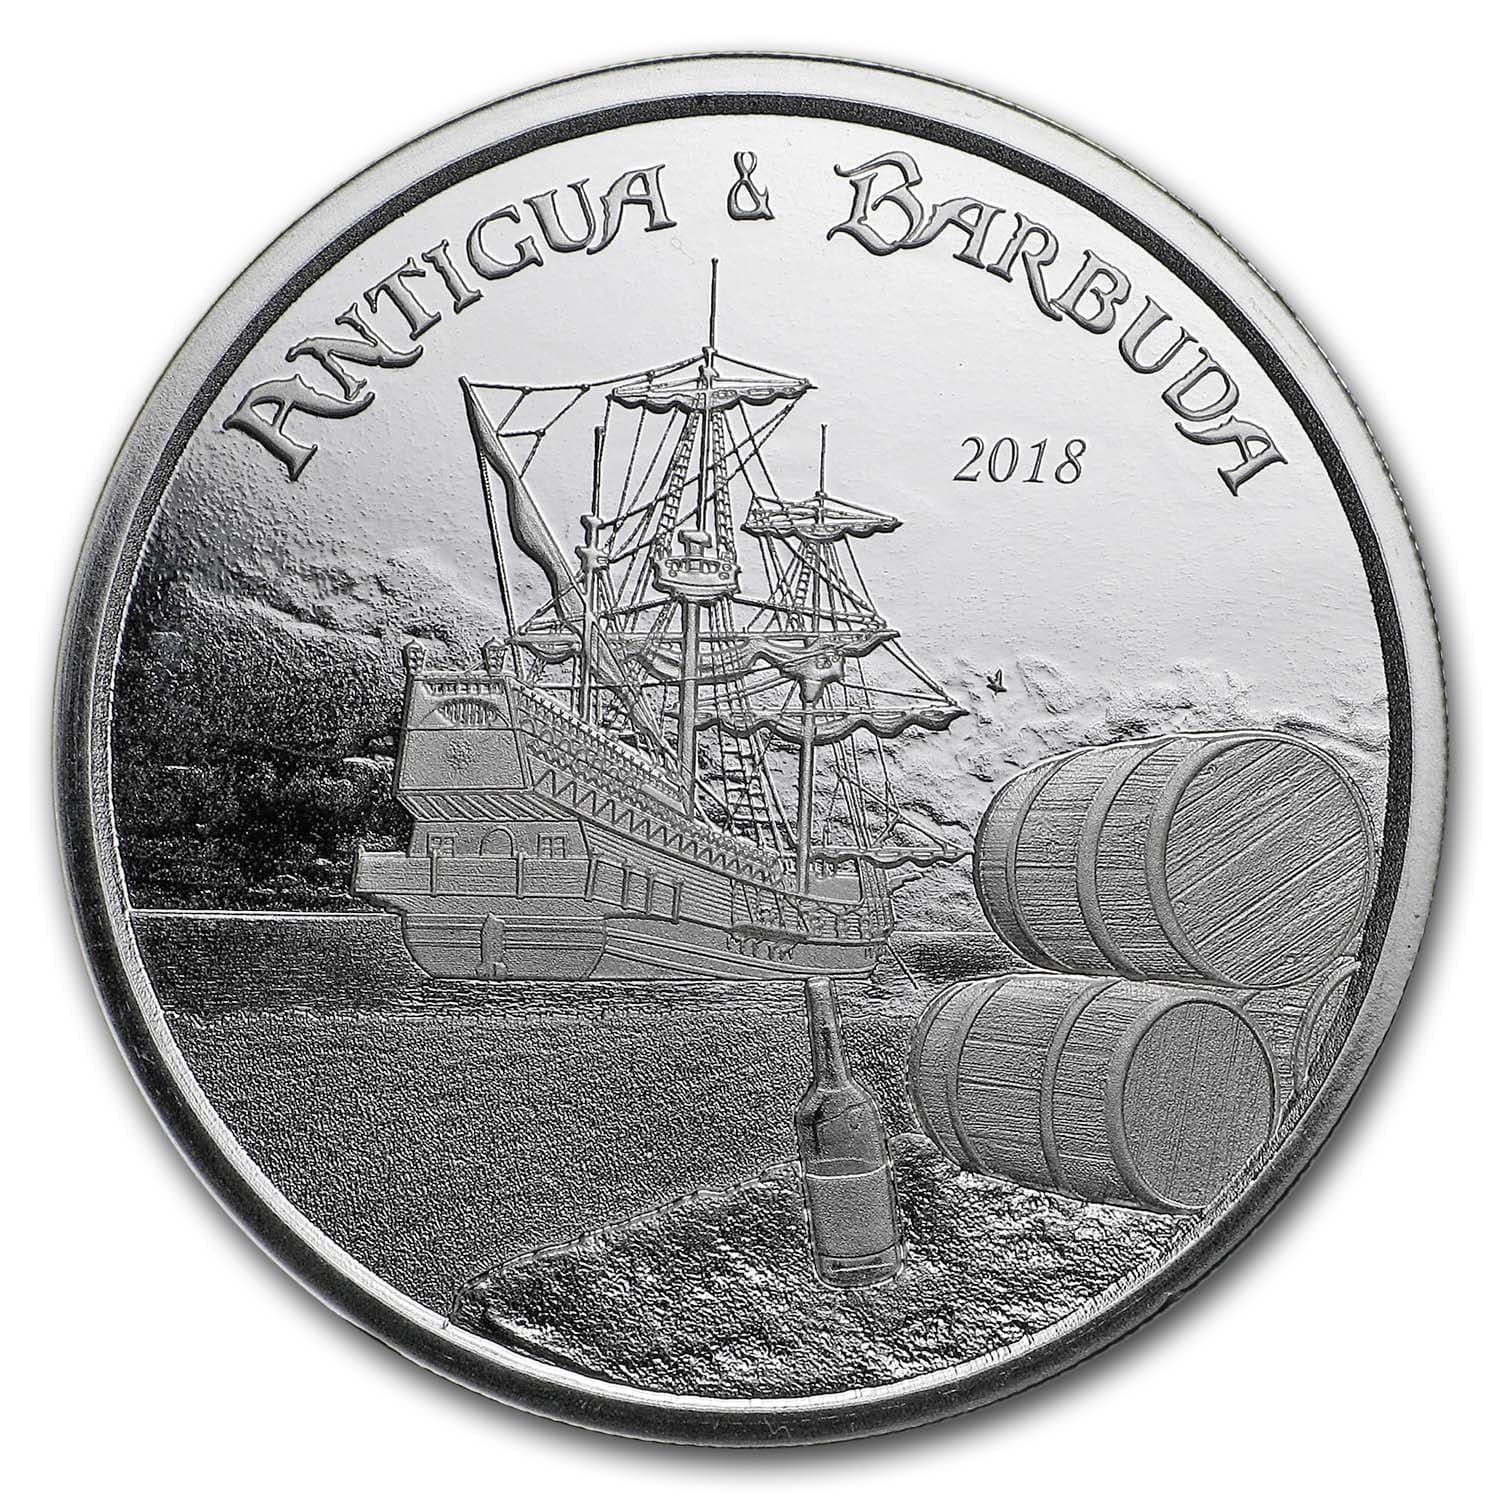 2019 Antigua & Barbuda Silver Rum Runner 1 oz 5 Coin Pack 